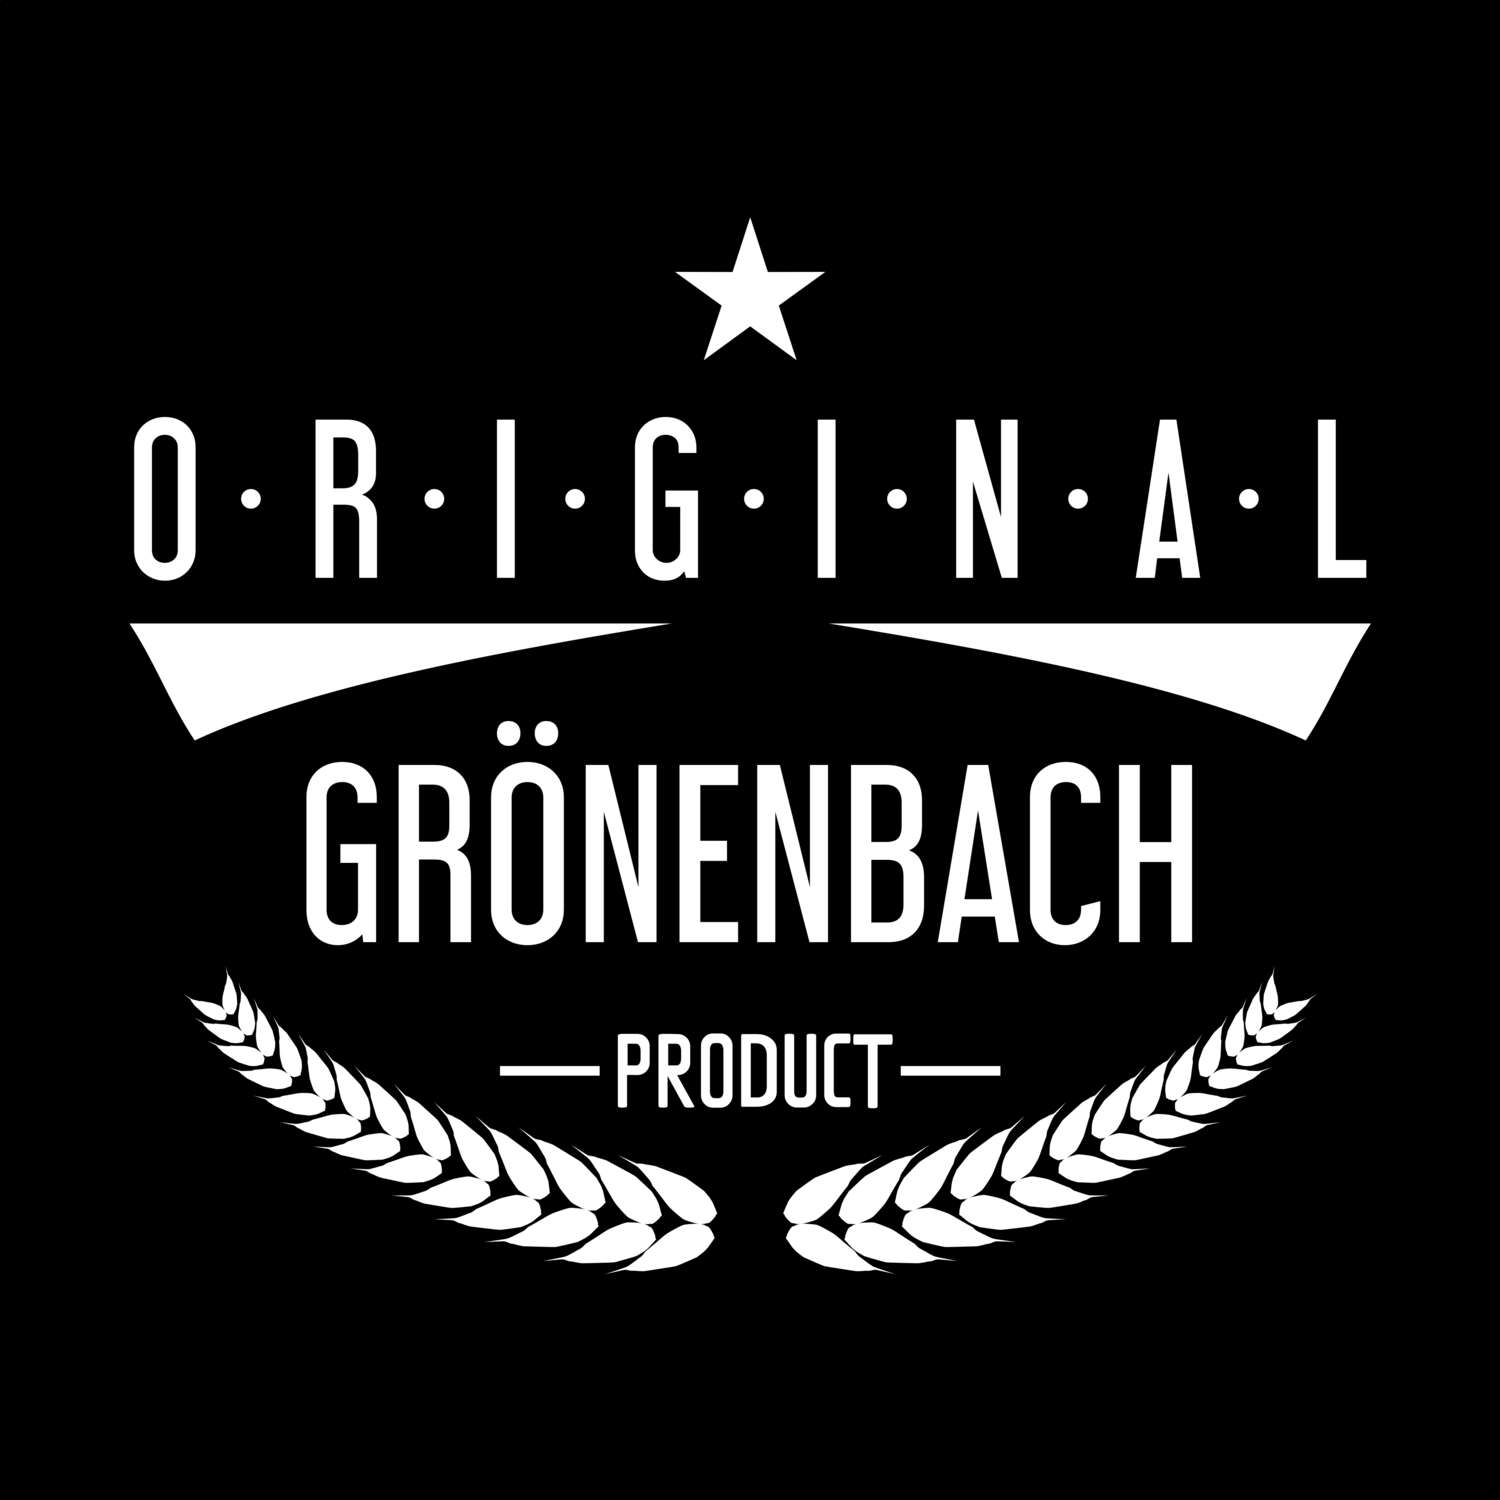 Grönenbach T-Shirt »Original Product«